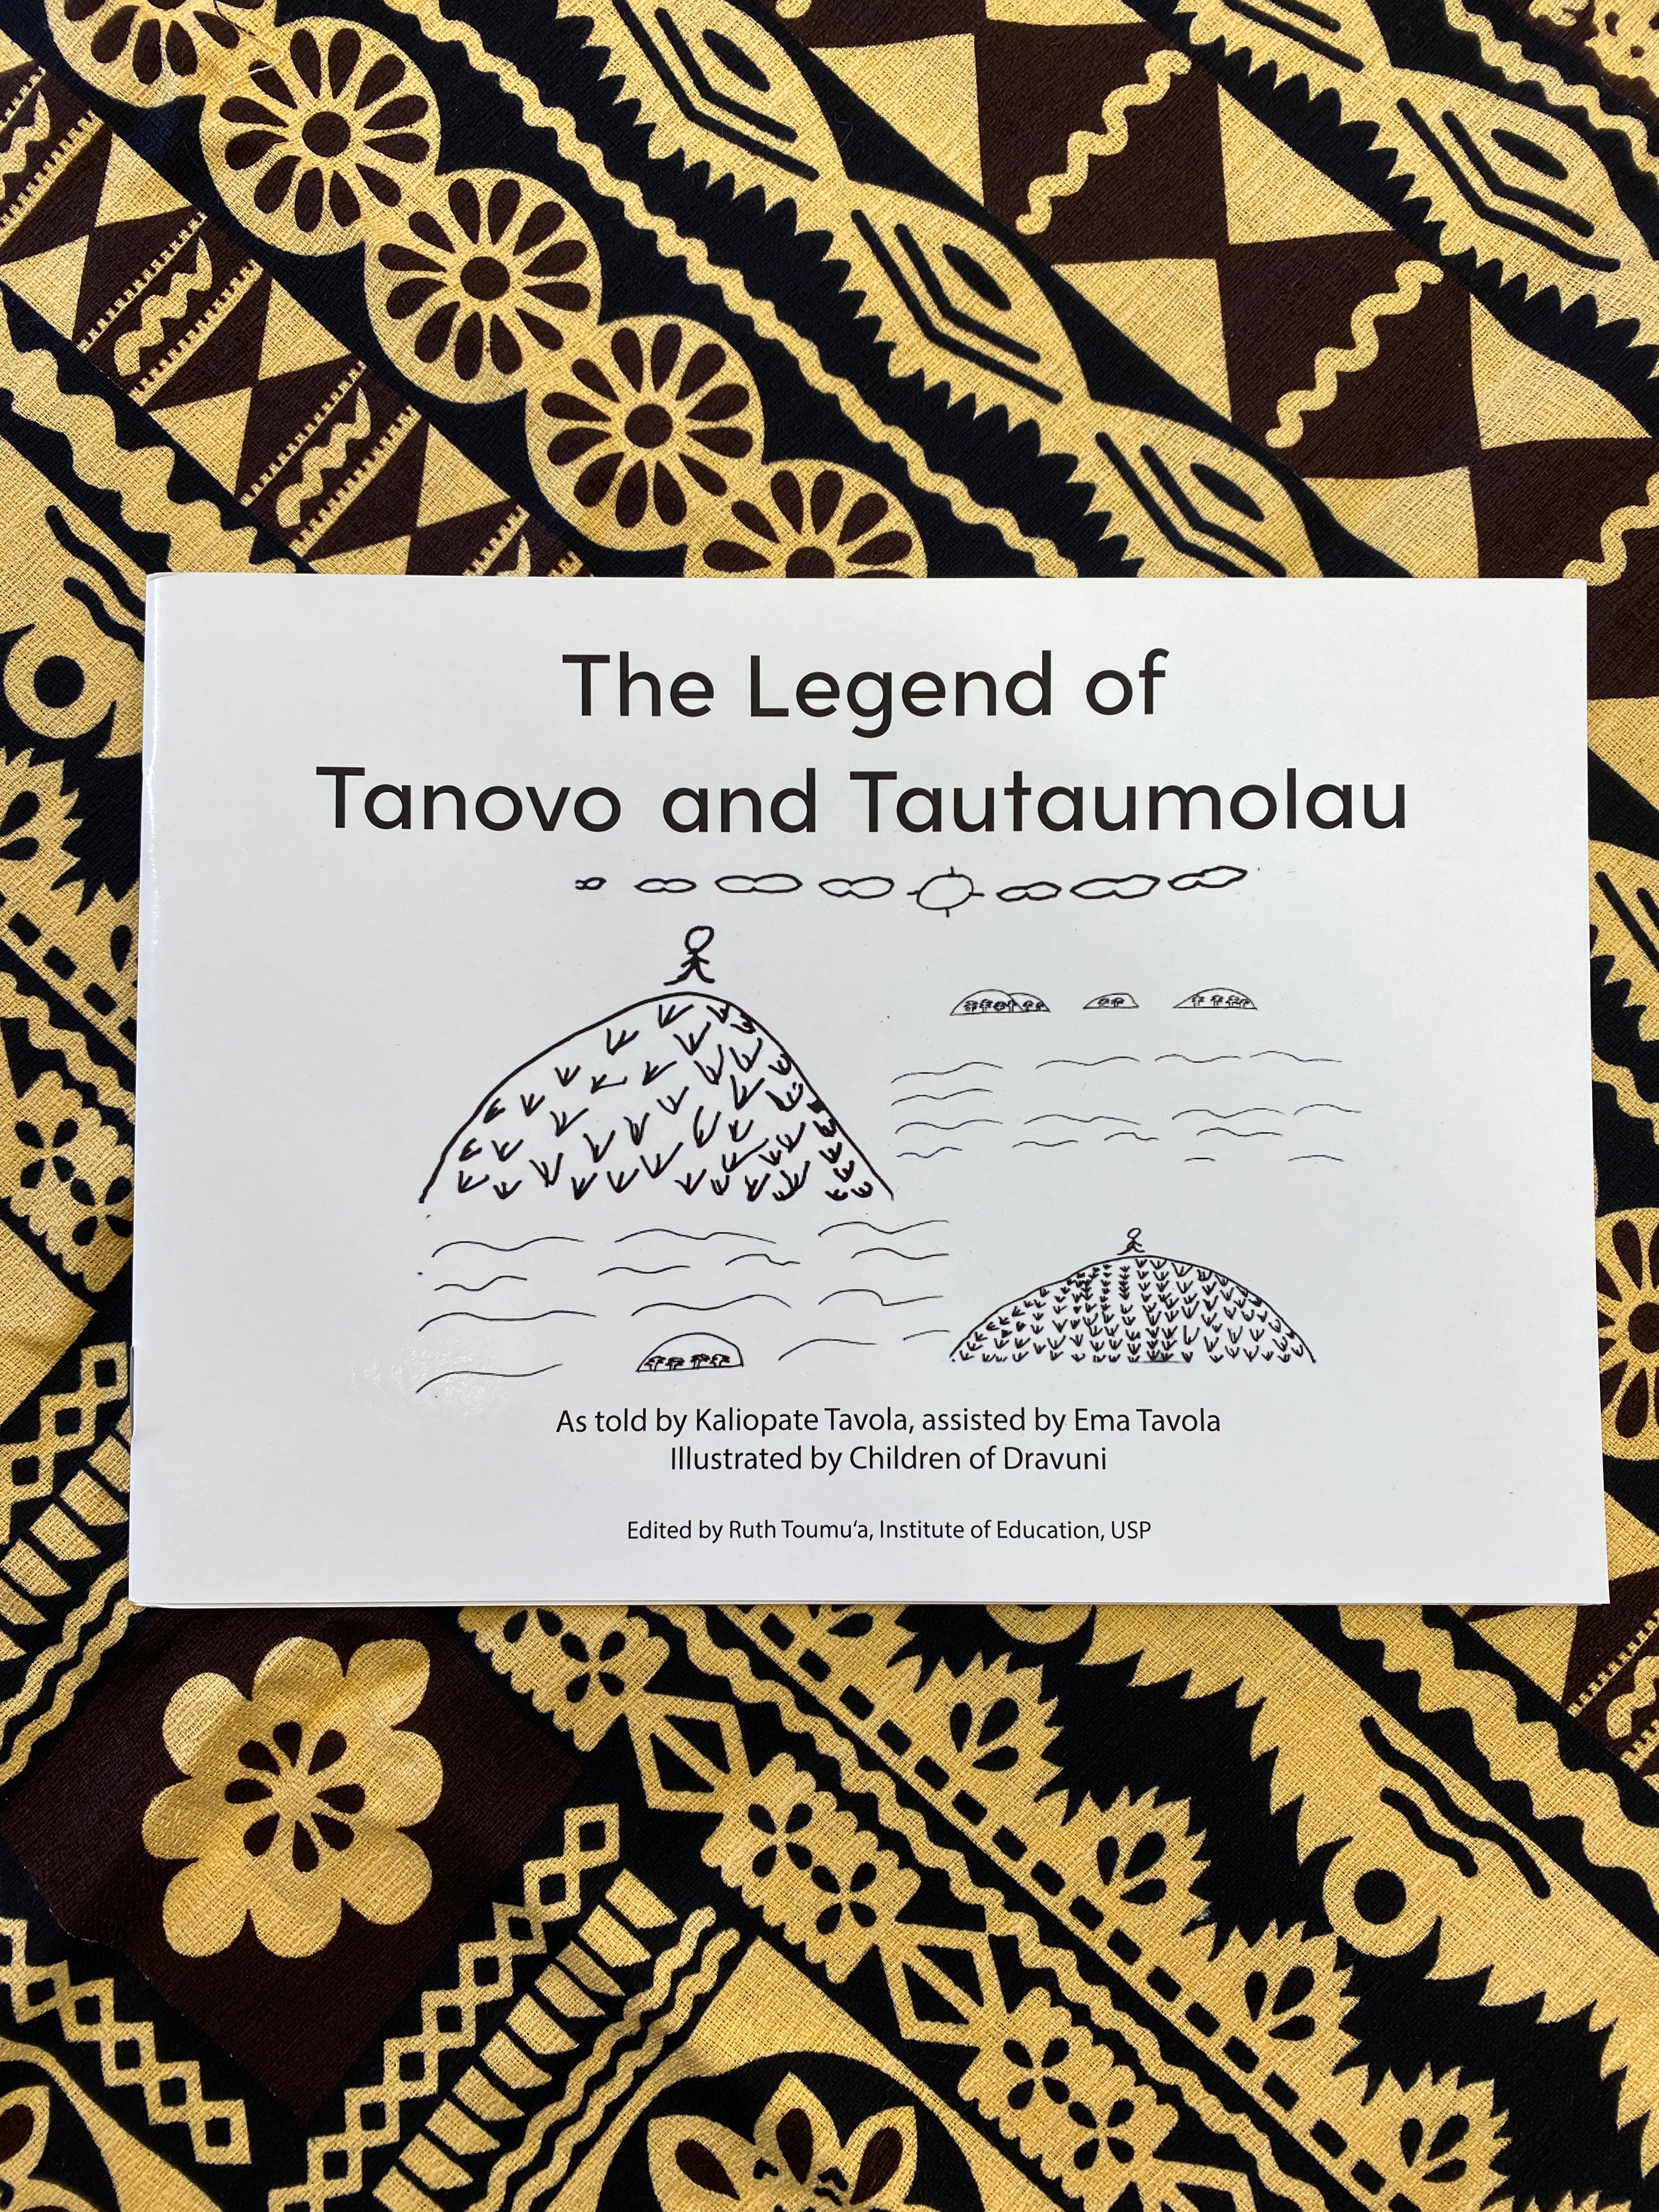 The Legend of Tanovo and Tautaumolau by Kaliopate & Ema Tavola